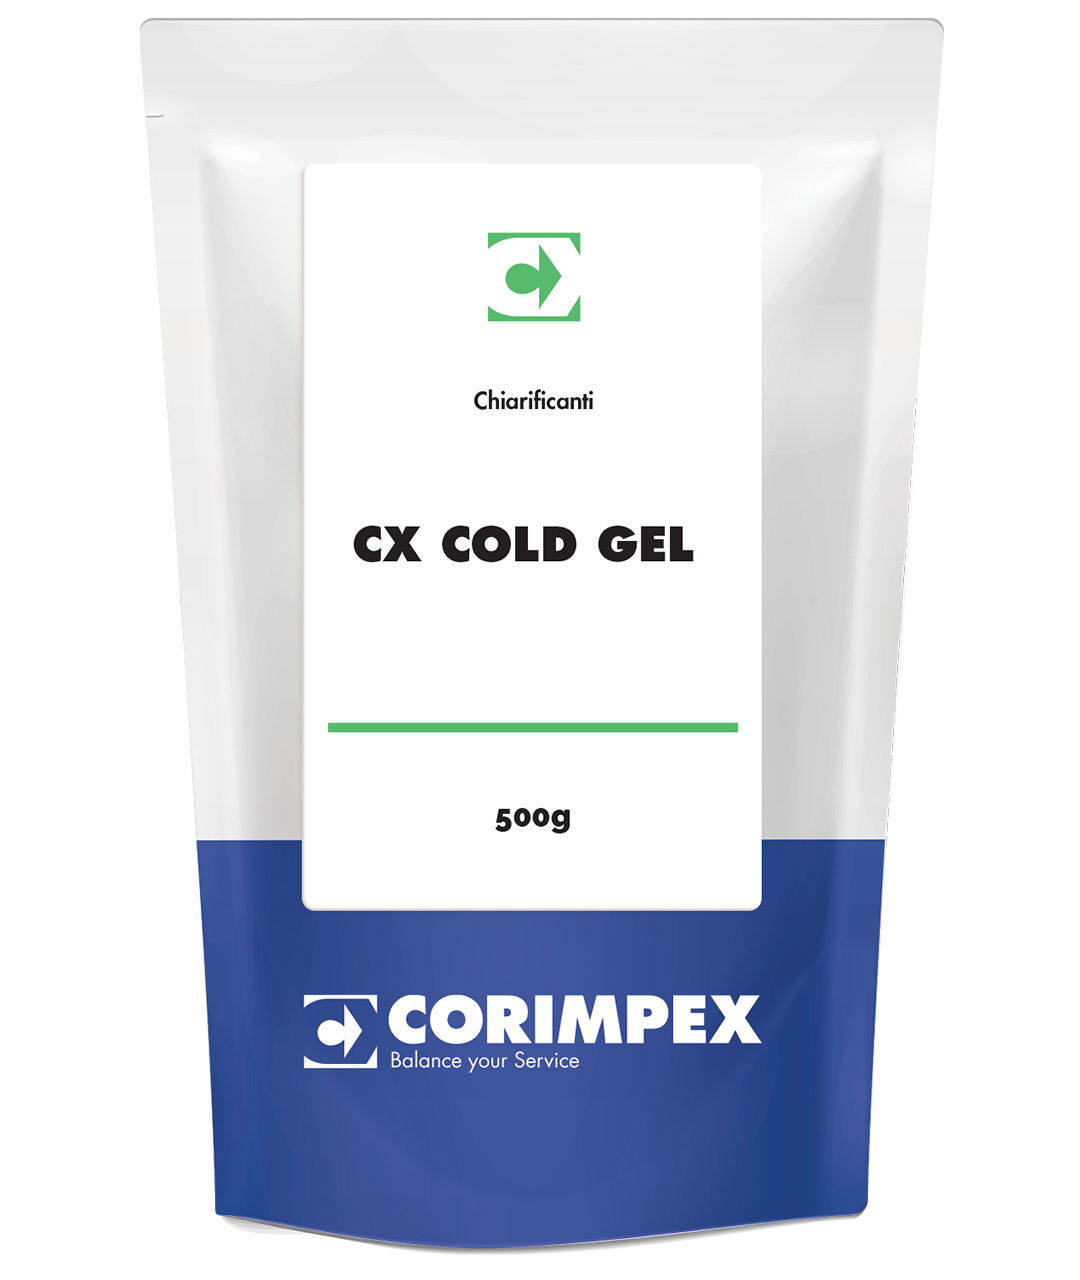 CX COLD GEL